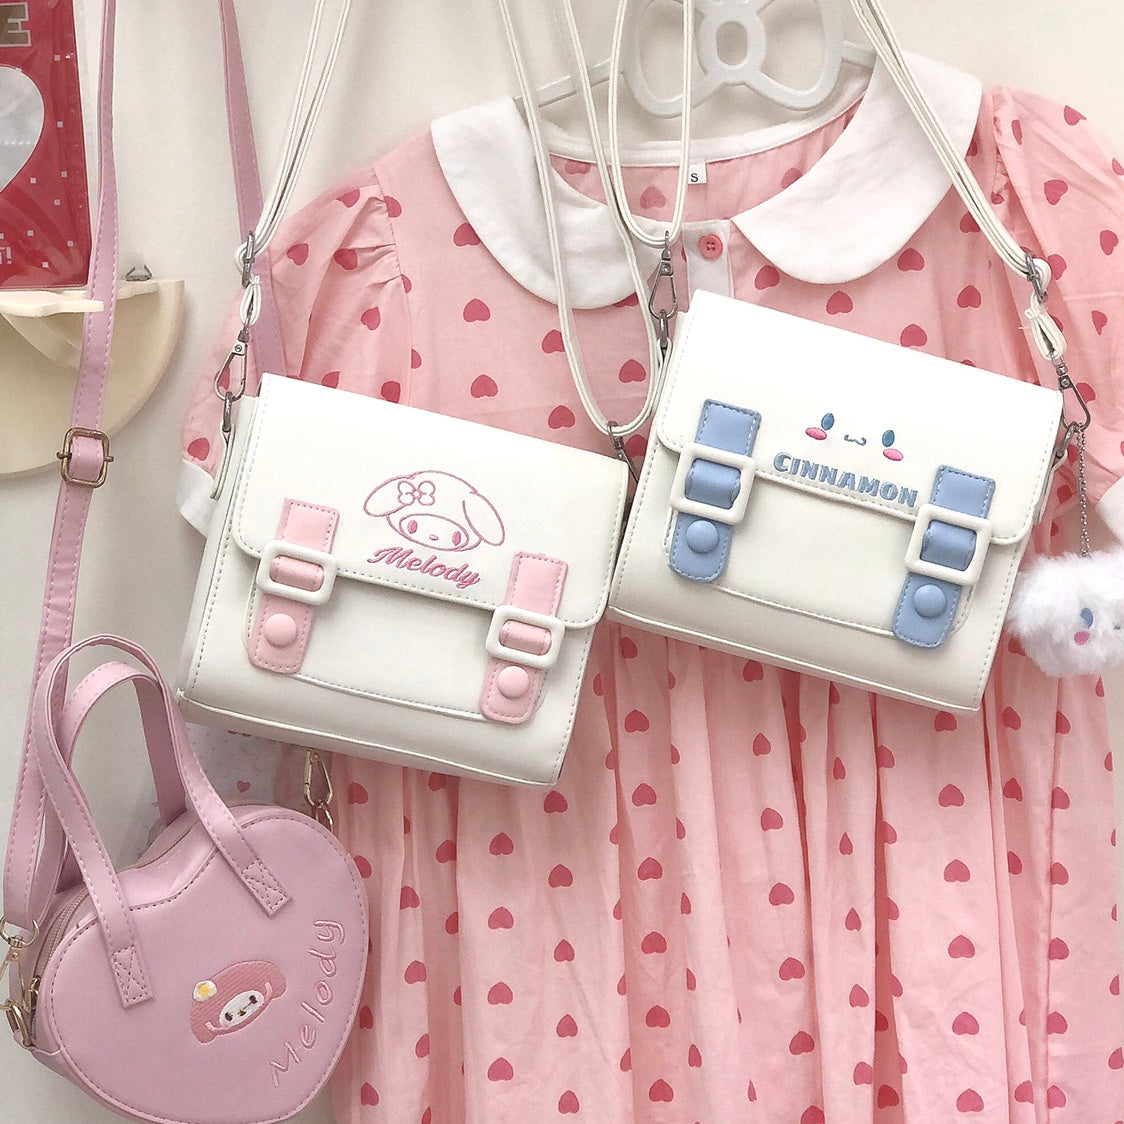 Japanese cute melody bag yv30851